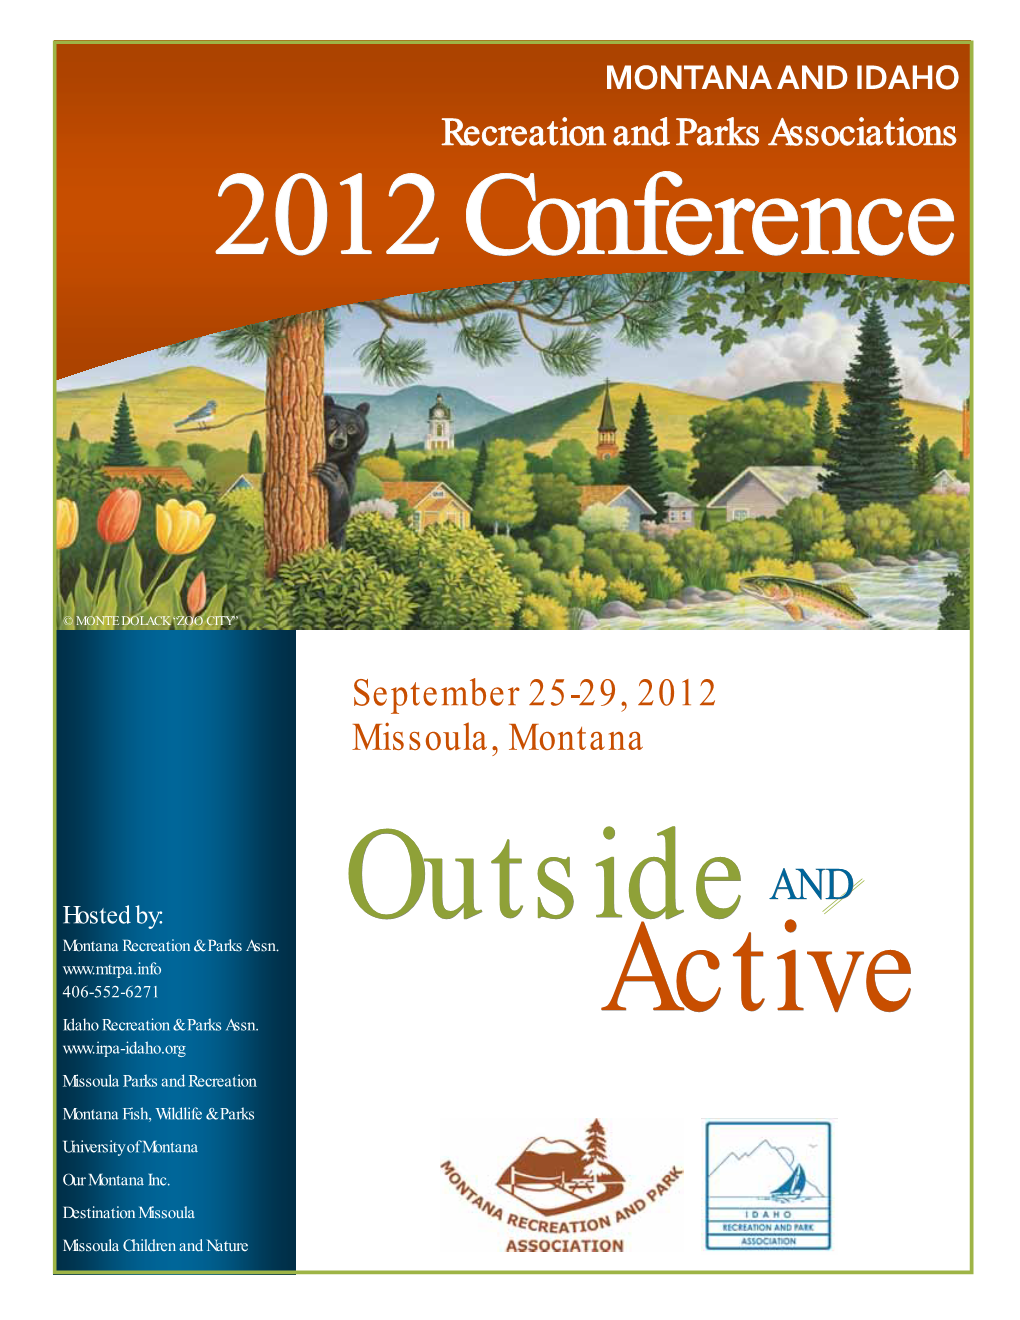 September 25-29, 2012 Missoula, Montana Recreation and Parks